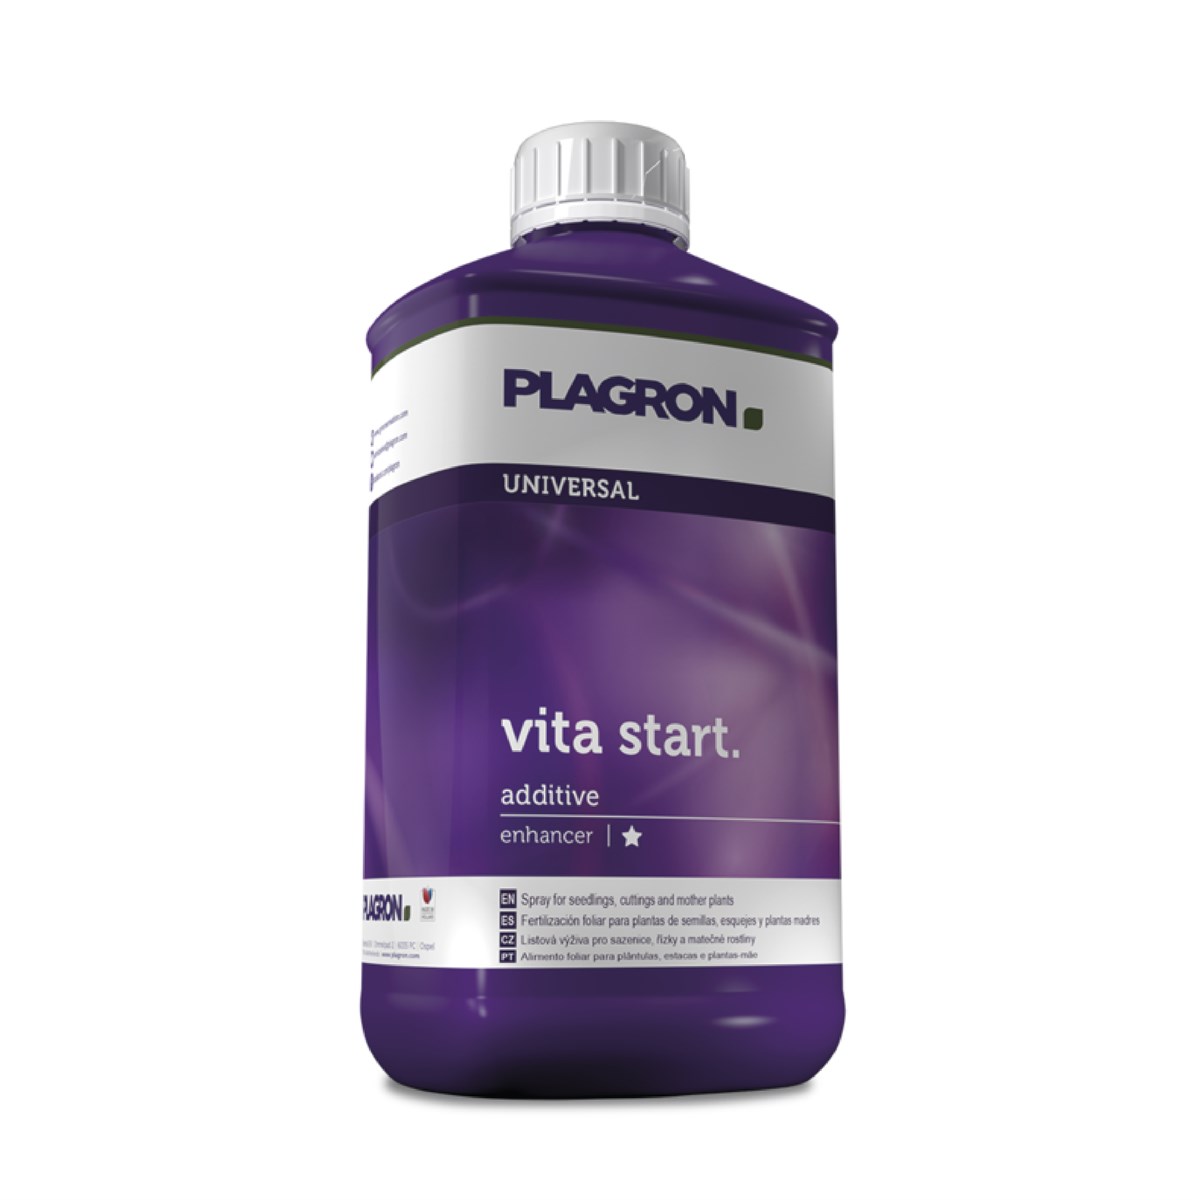 Plagron VitaStart